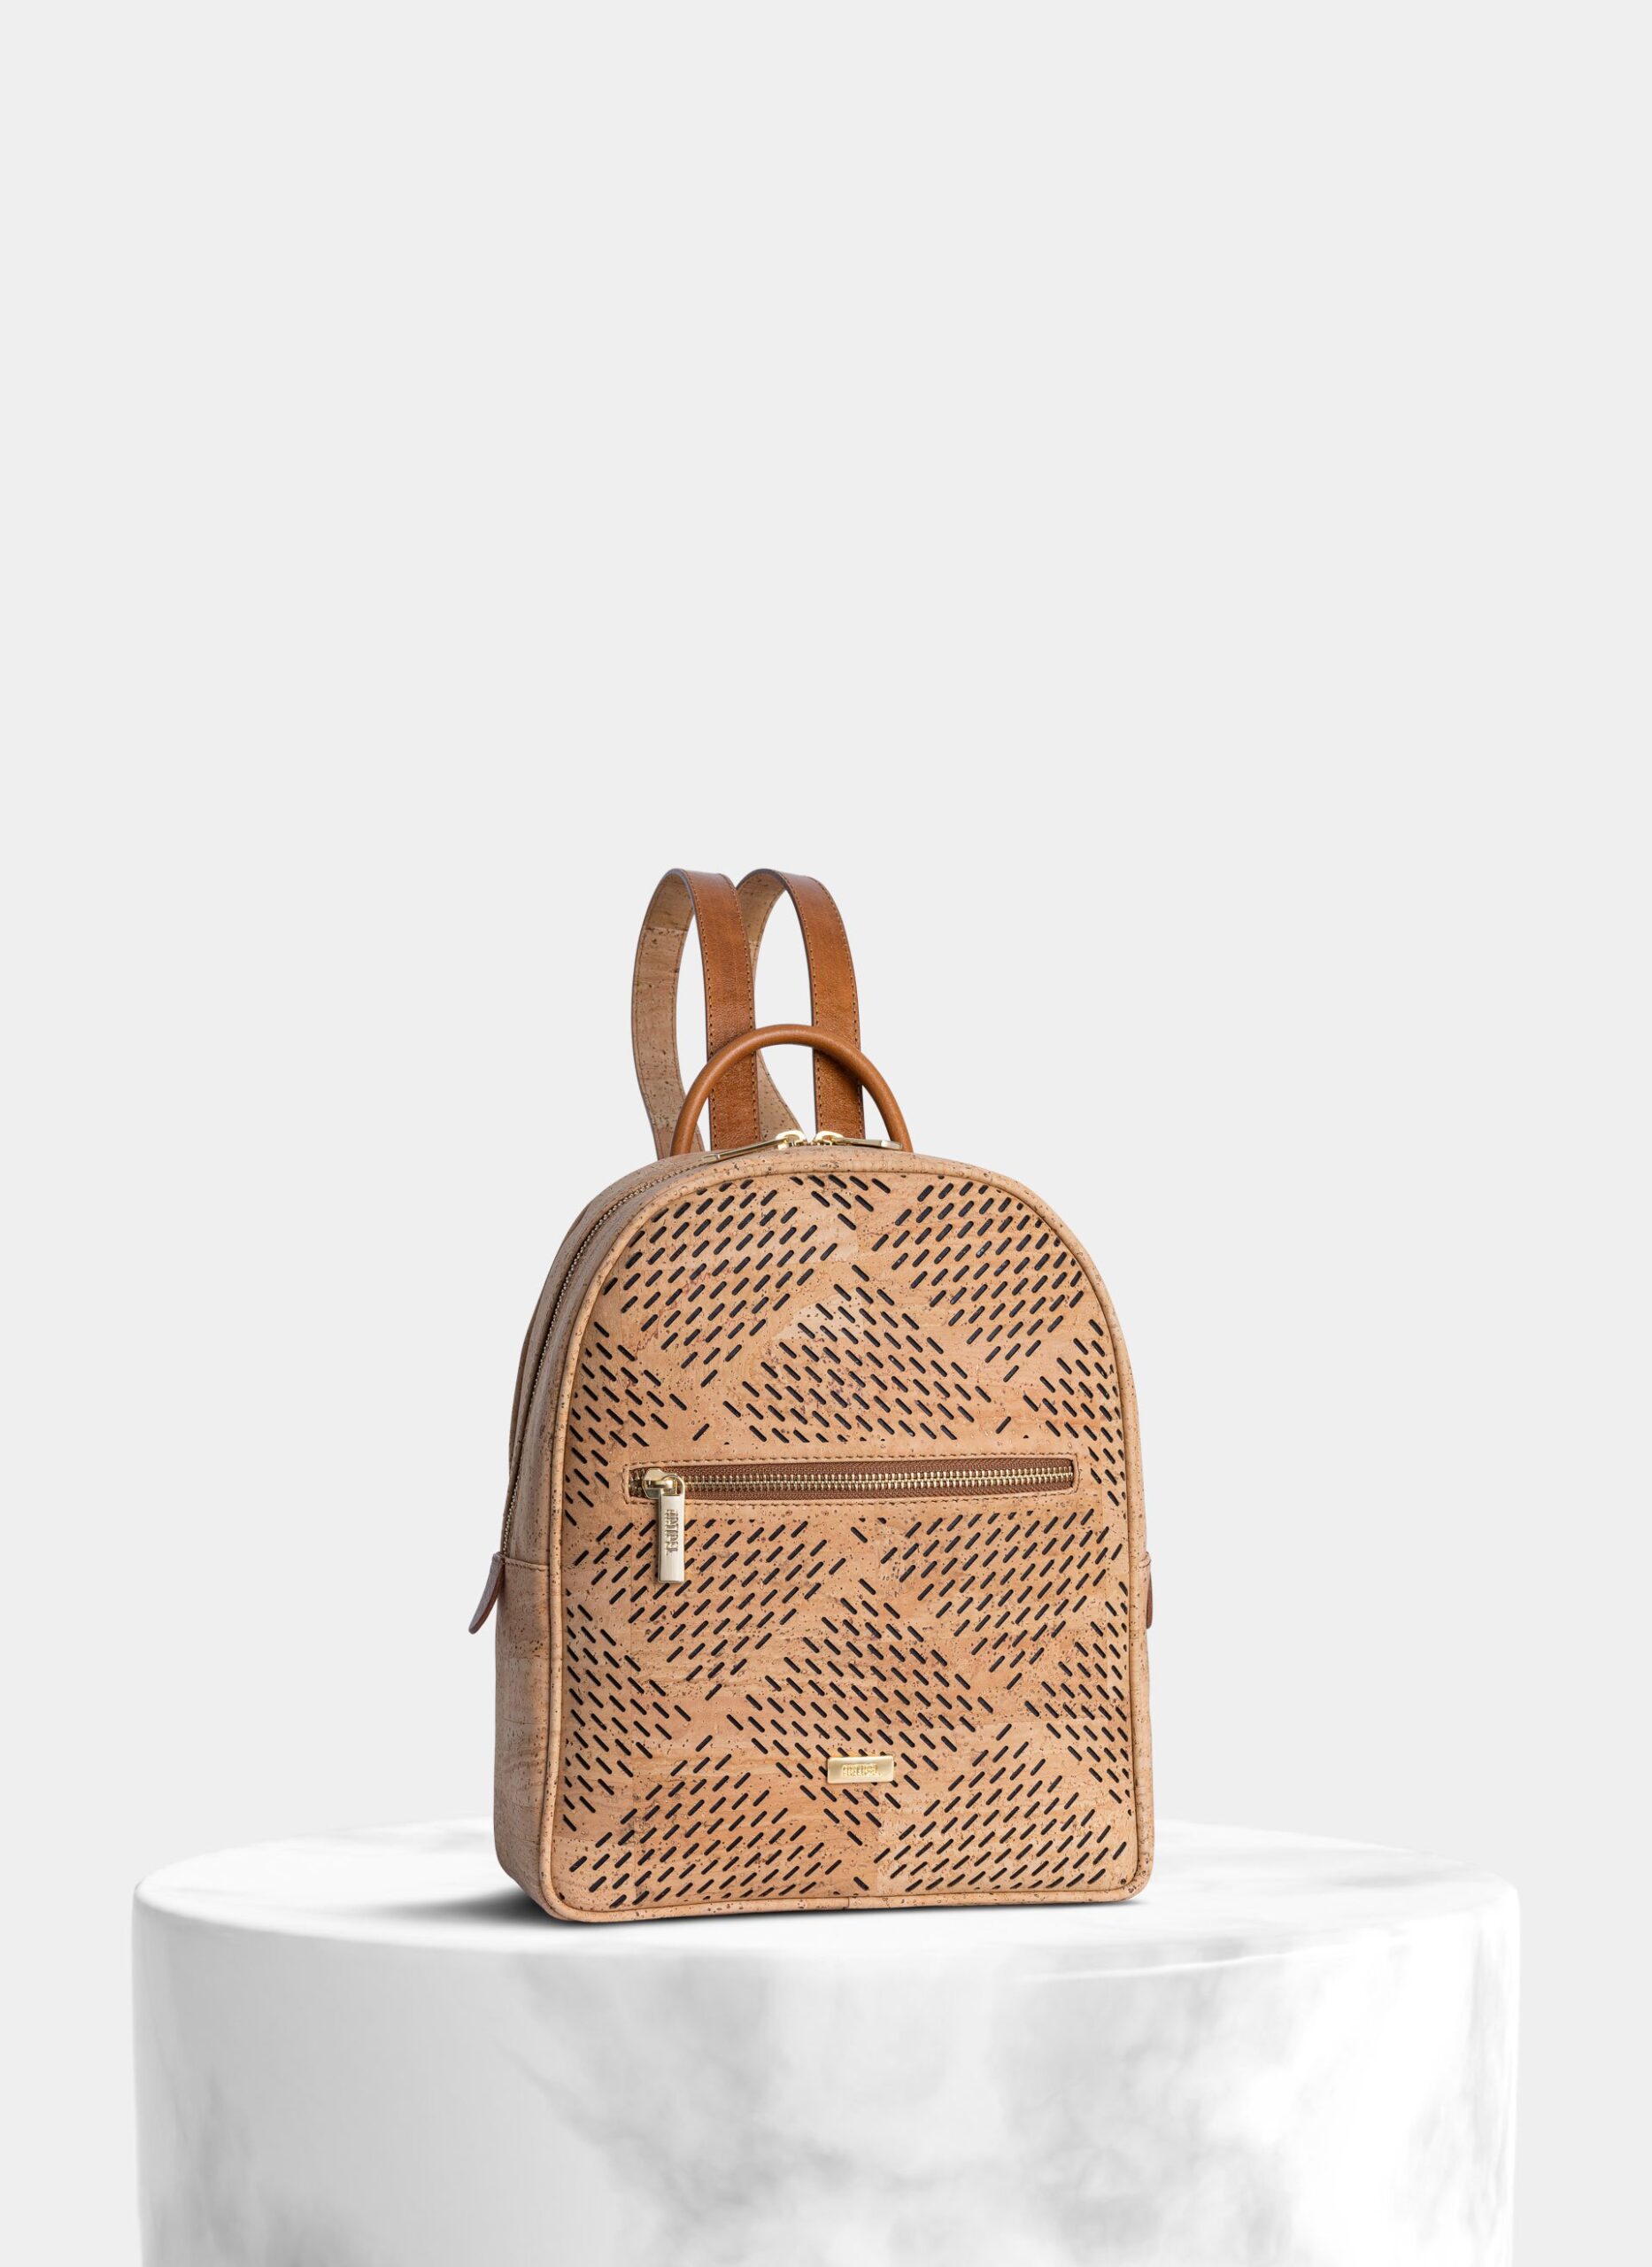 Natural Cork Backpack Texture Detail - Shop now at StudioCork